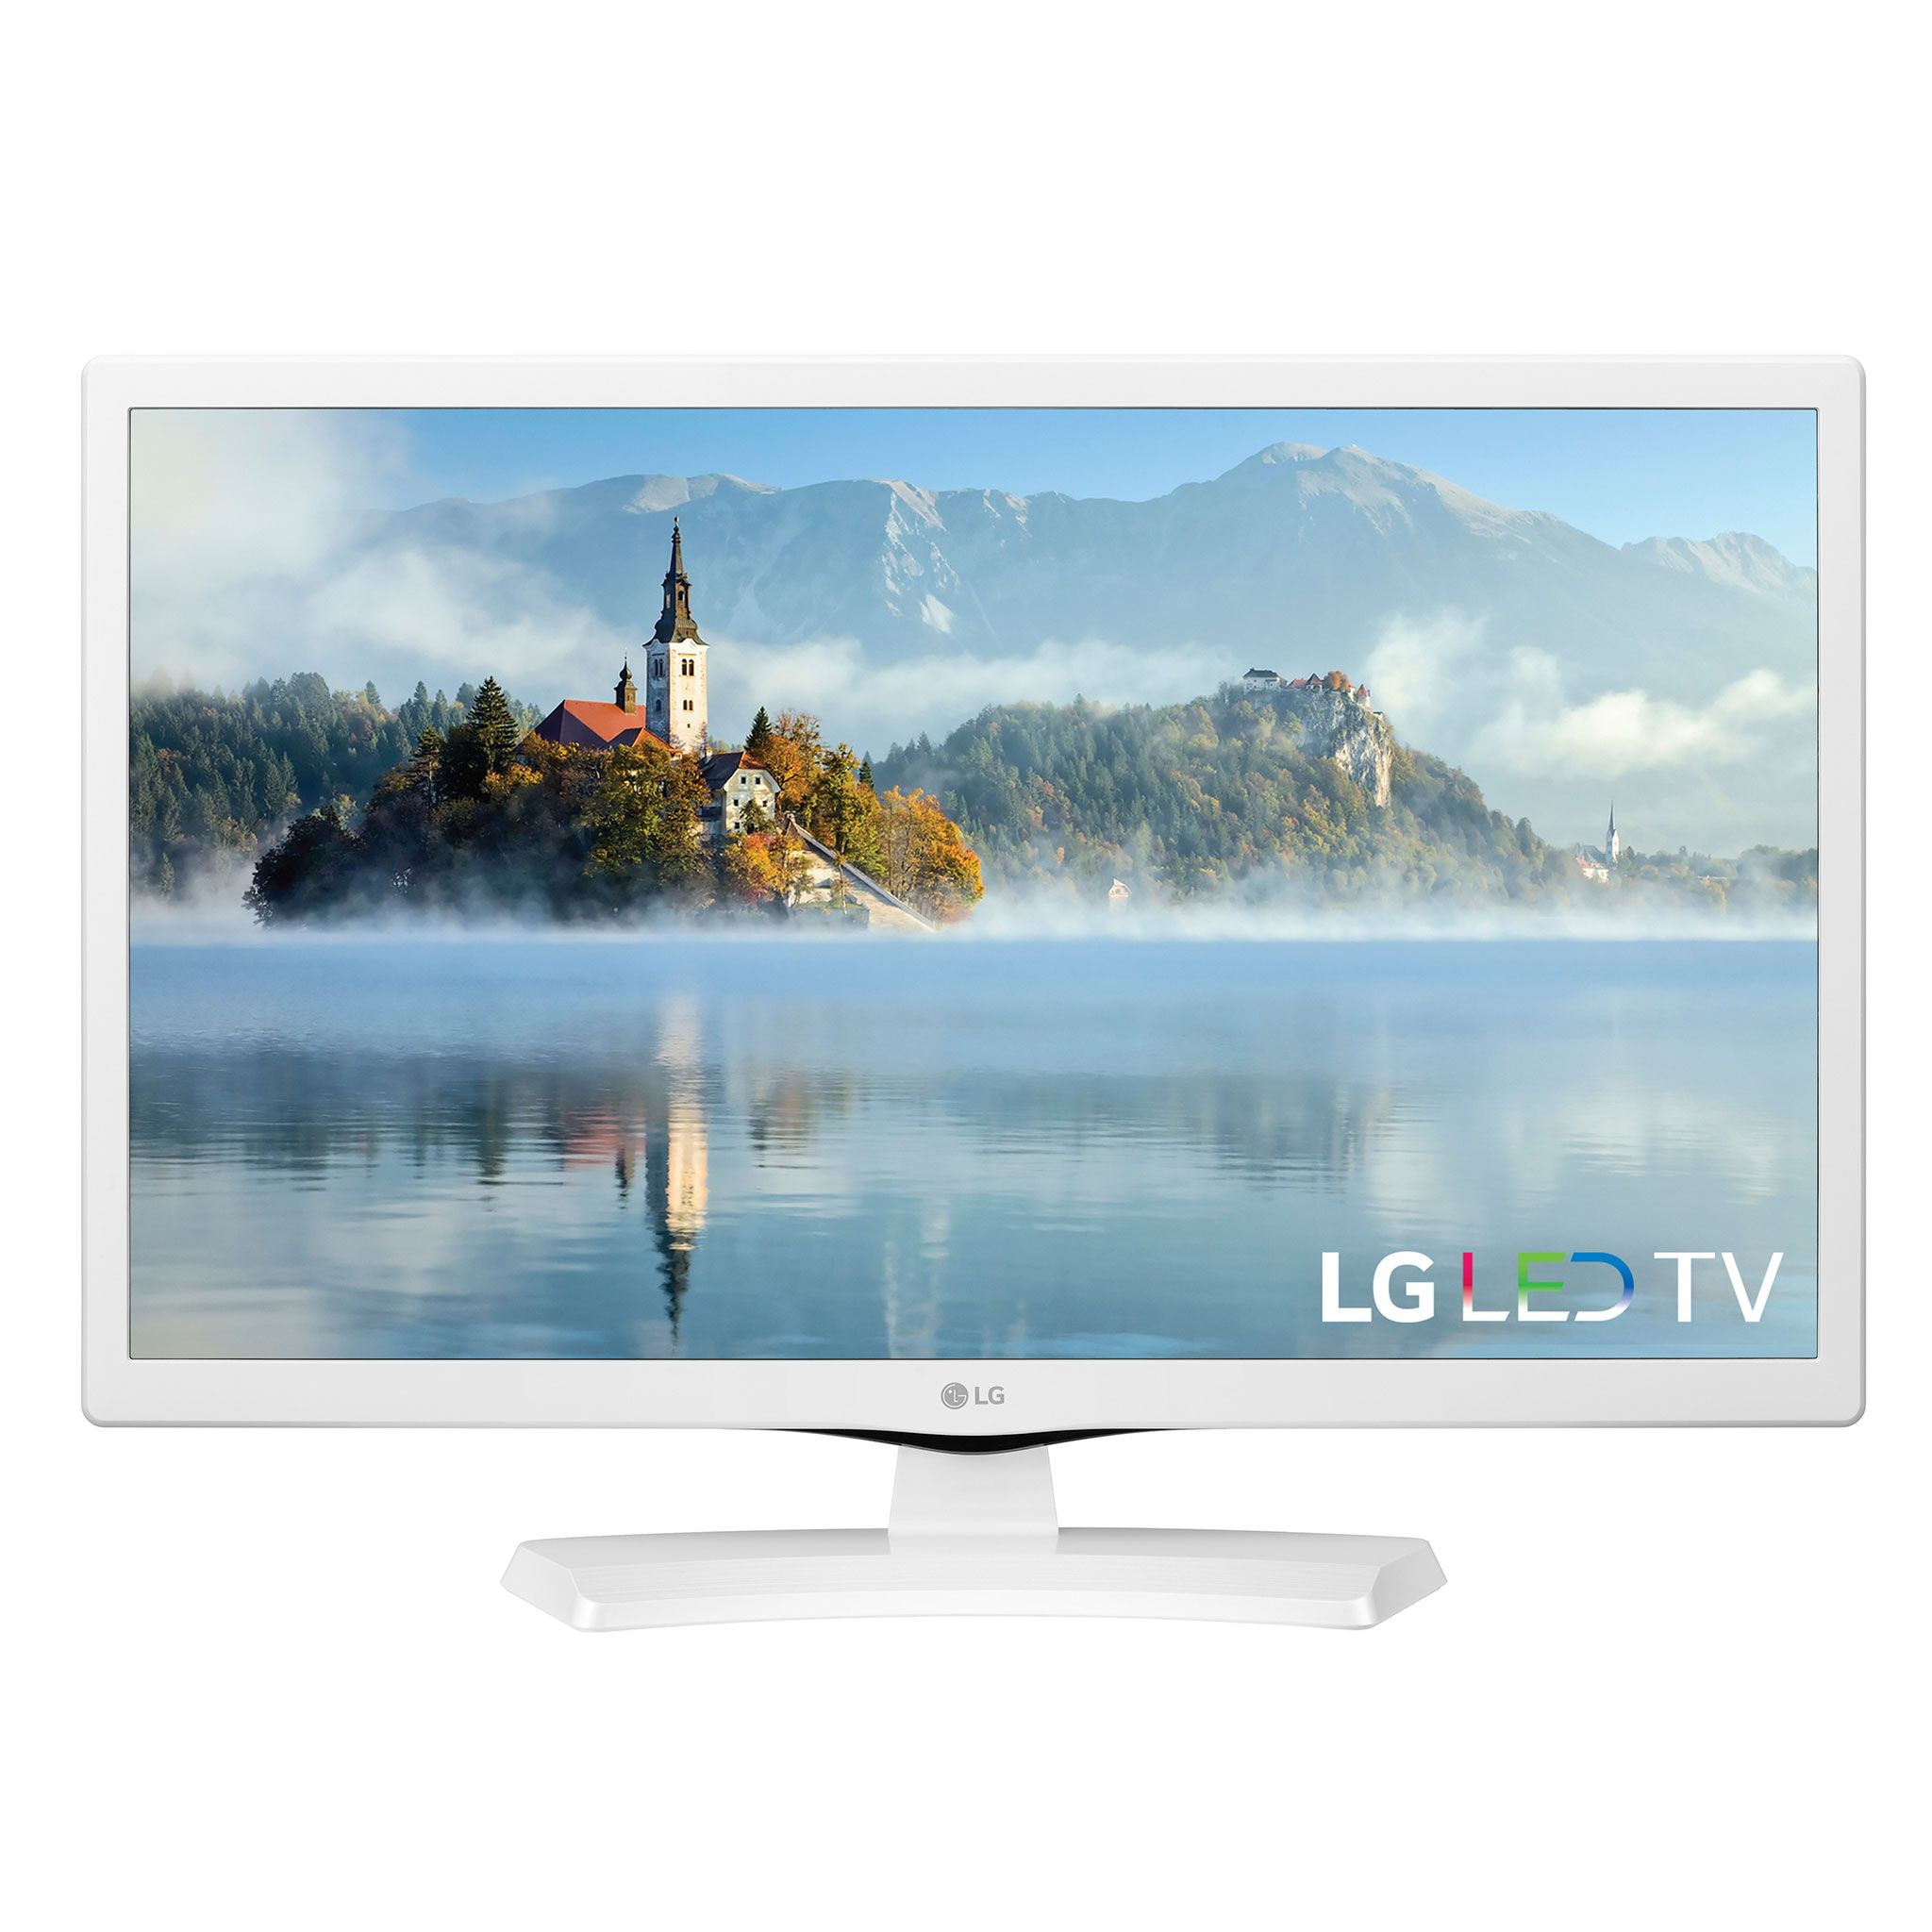 Куплю белый телевизор lg. Телевизор LG 24 дюйма белый. ТВ самсунг 24 дюйма смарт ТВ. LG белый телевизор 43 Smart TV. Телевизор Samsung 24 белый Smart TV.